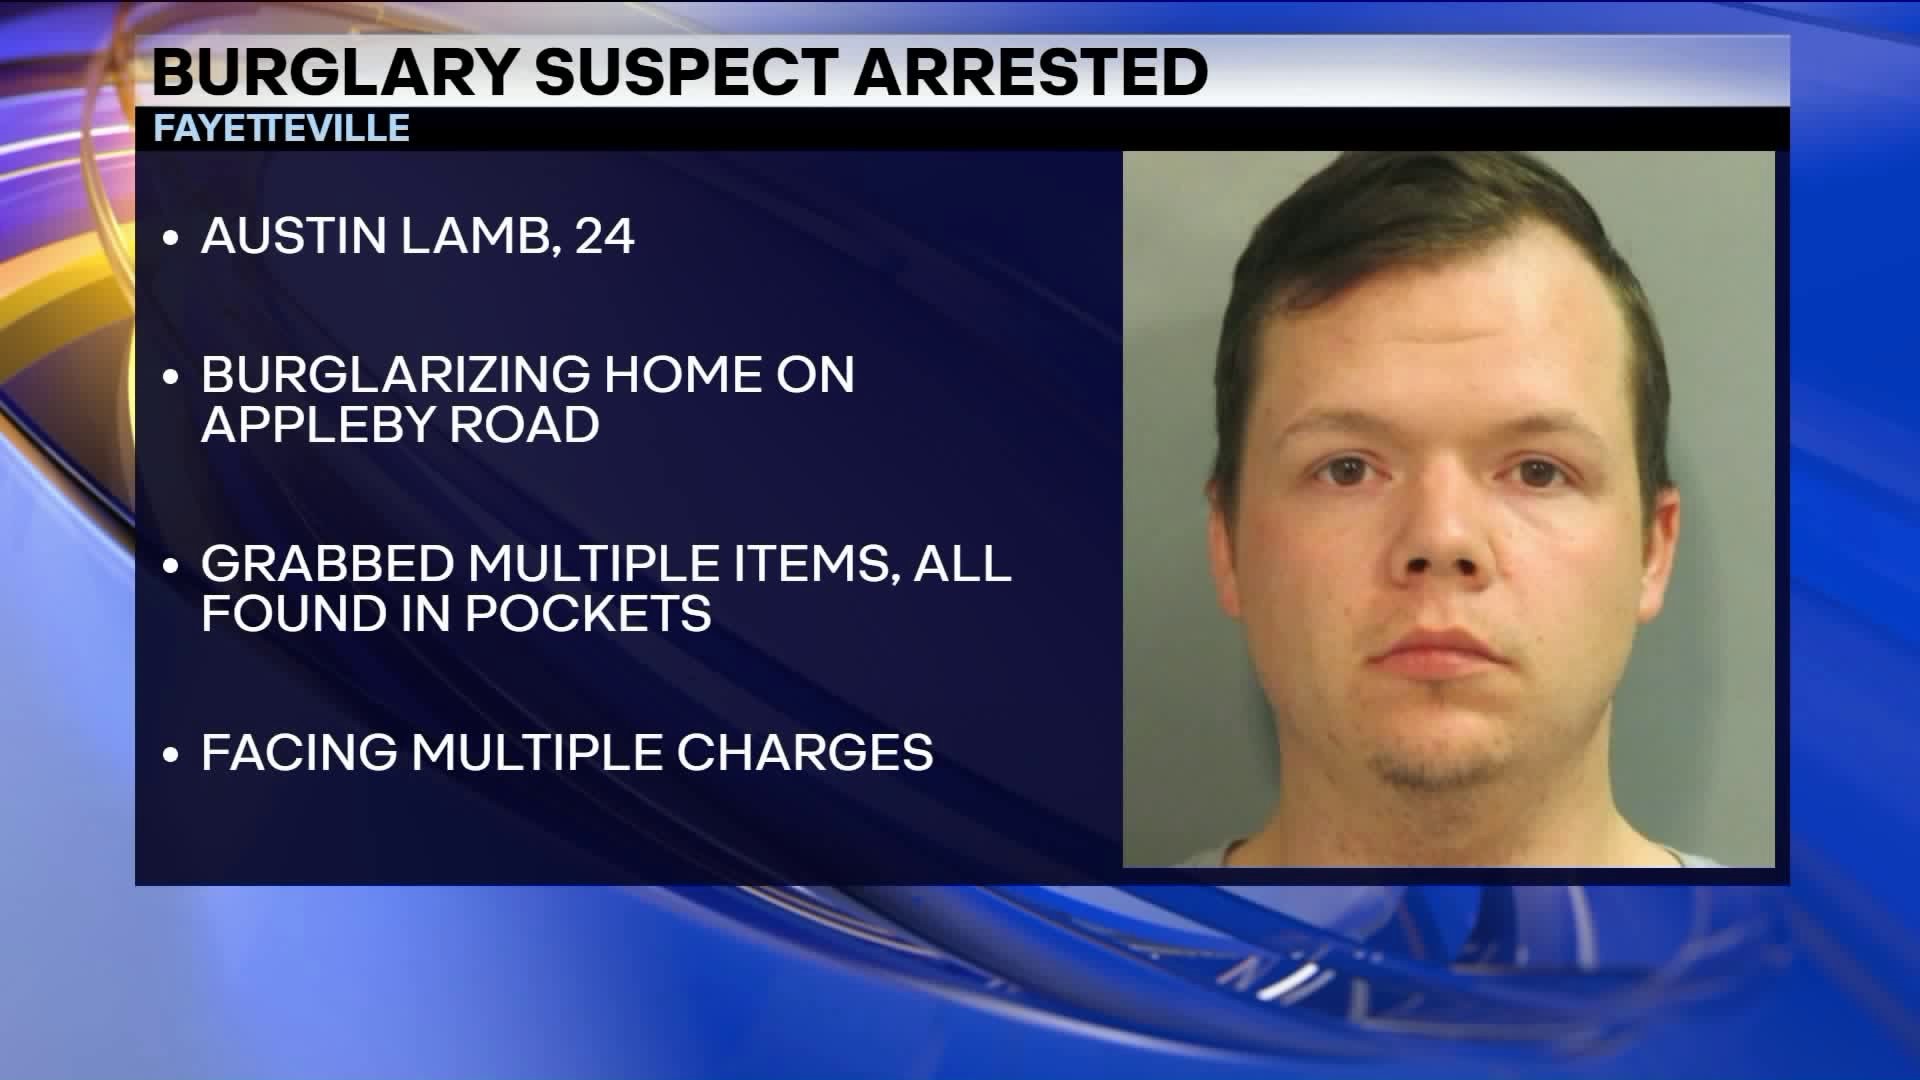 Fayetteville Burglary Suspect Arrested